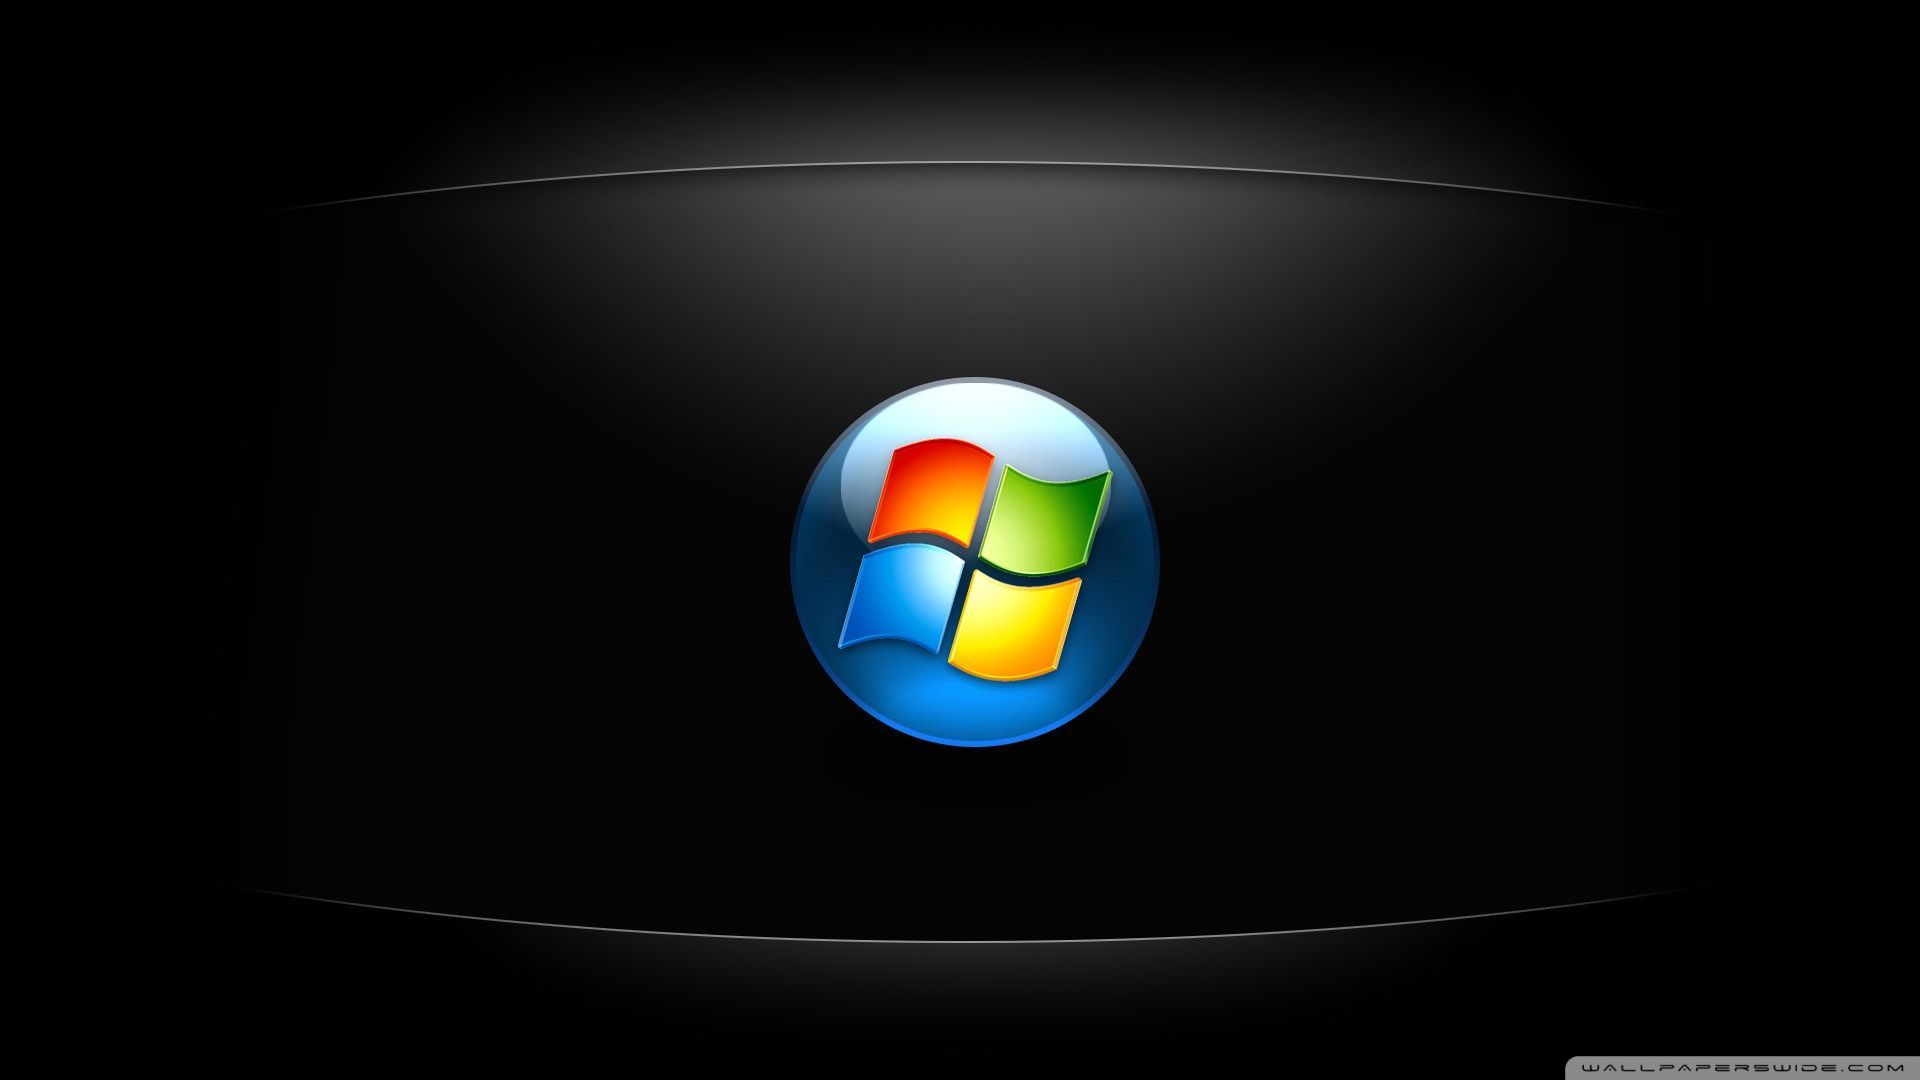 Windows 1920x1080 Widescreen Background Wallpapers 3014 - HD ...